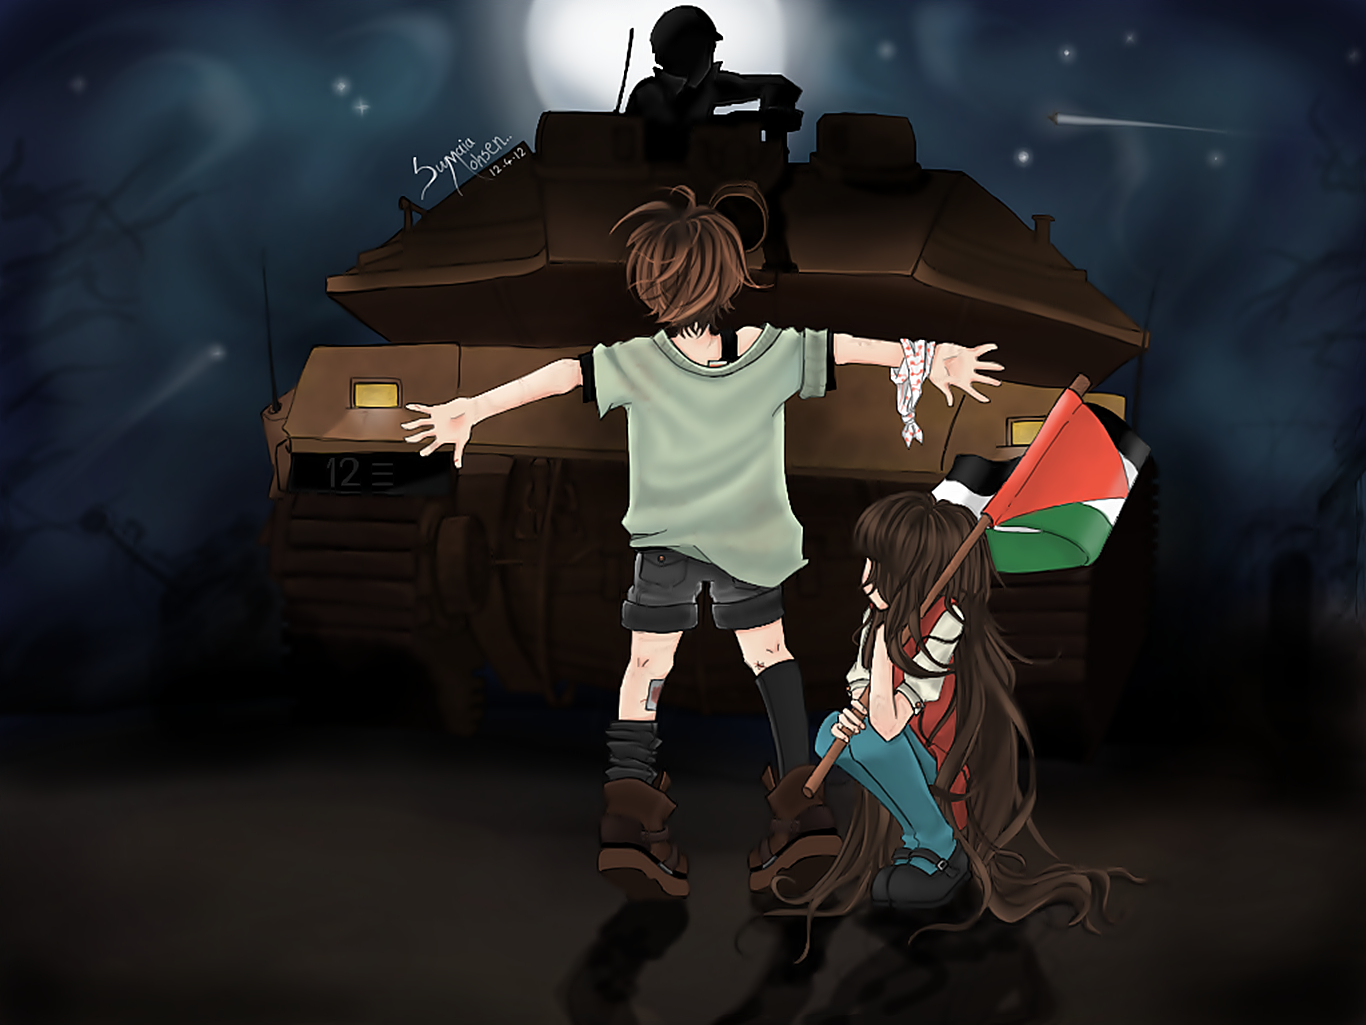 General 1366x1025 Palestine tank children flag war Merkava